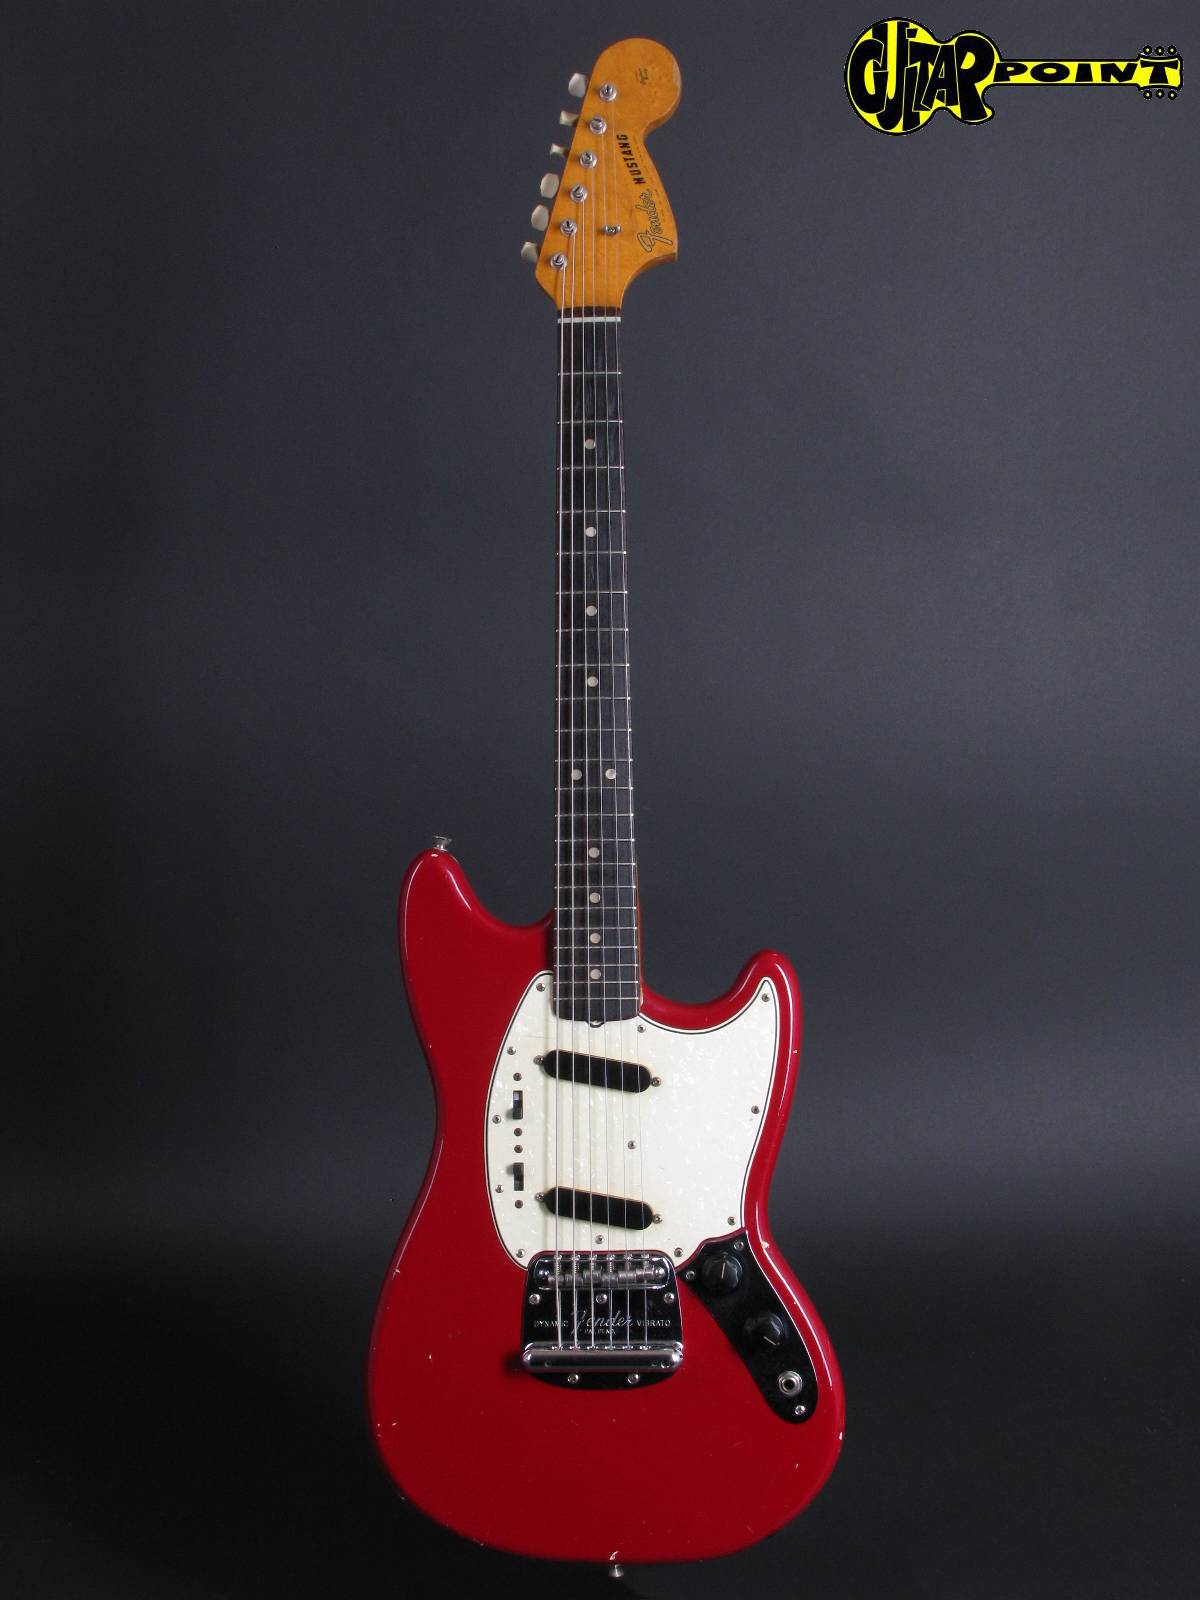 Fender guitars image Fender Mustang HD wallpaper and background